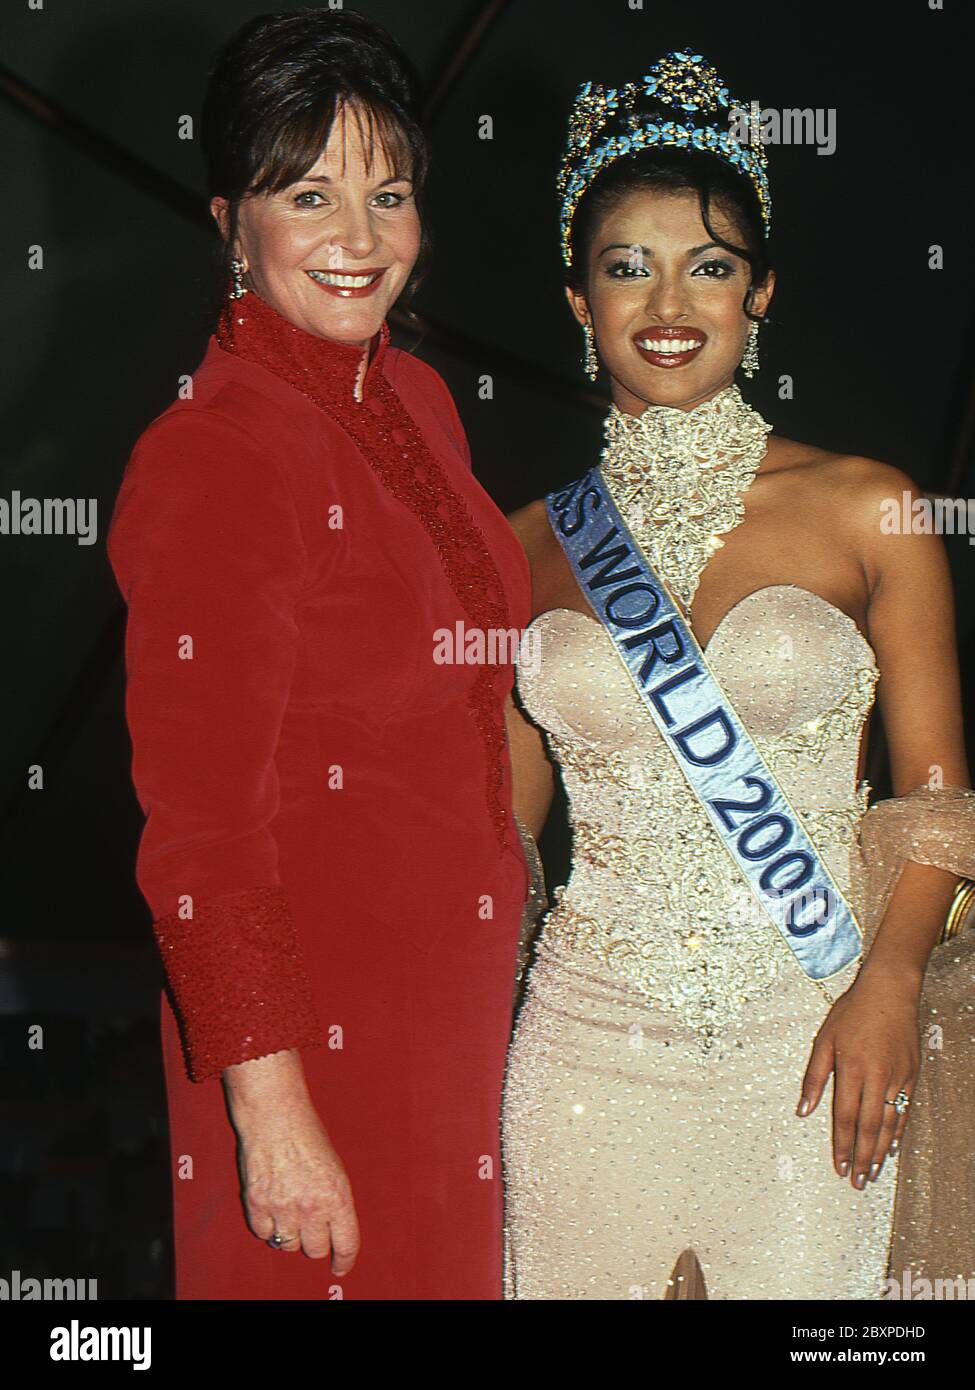 Miss World 2000 Priyanka Chopra with Miss World organiser Julia Morley Stock Photo